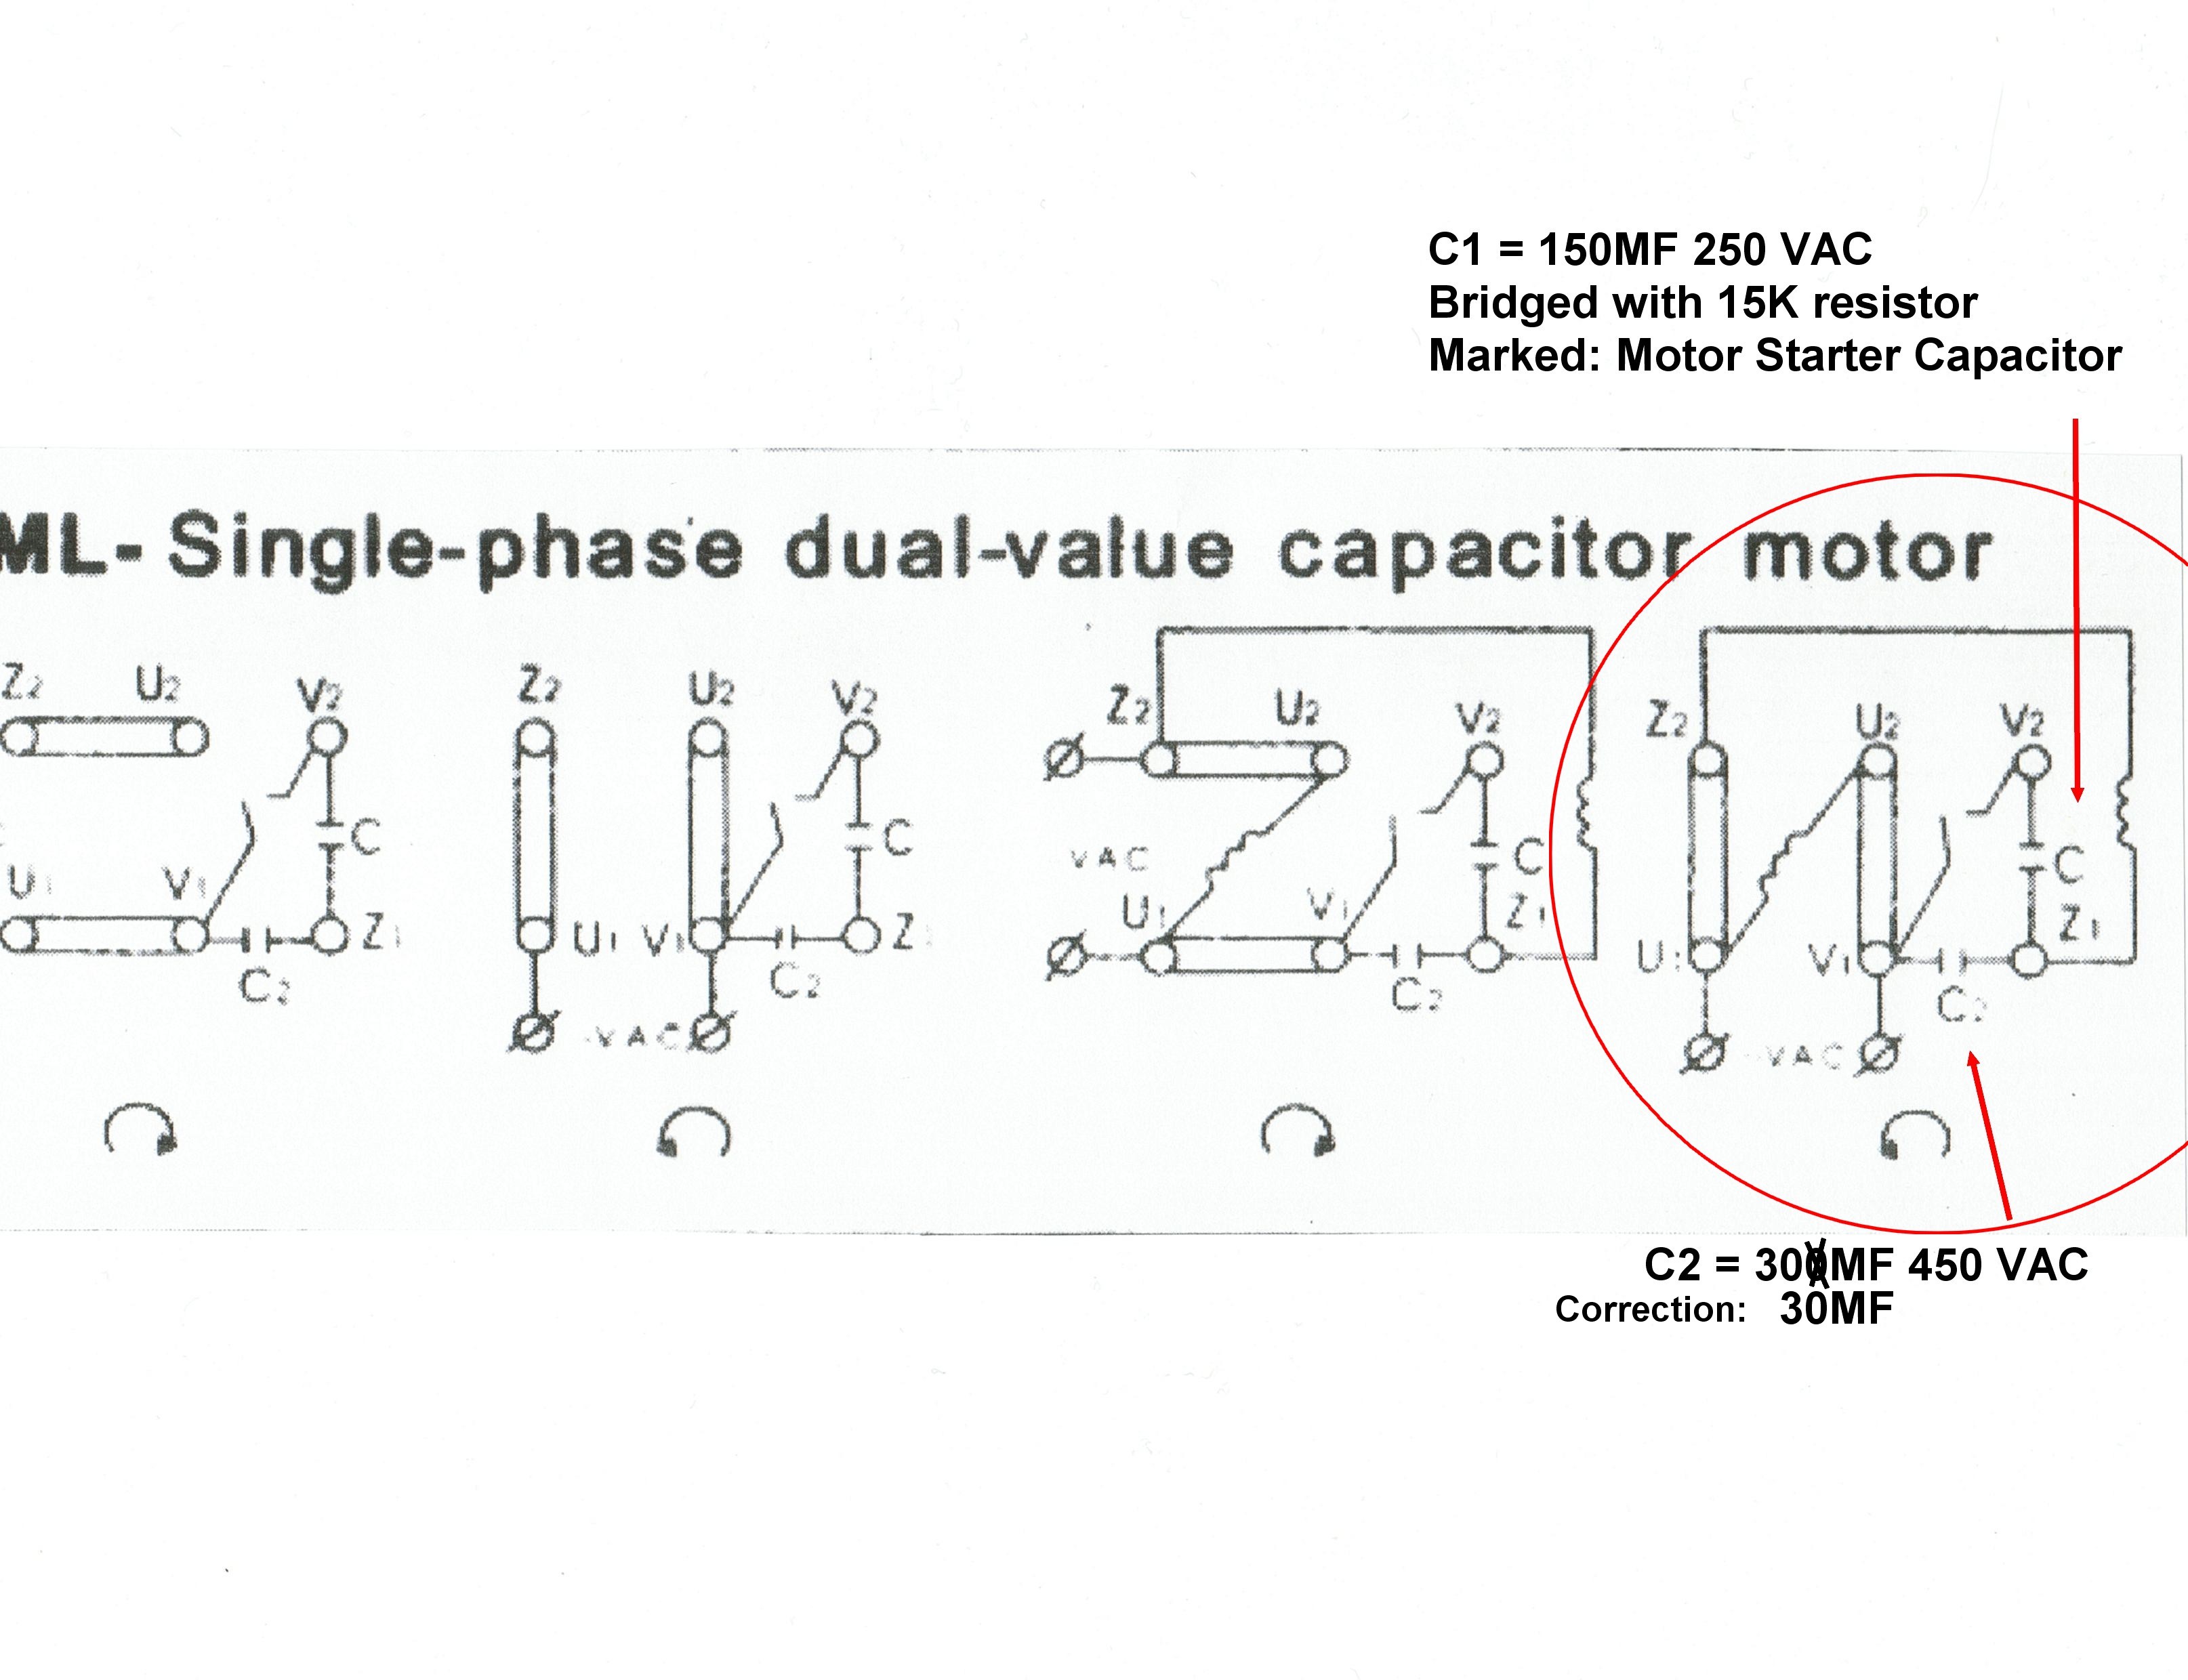 1ph run pacitor wiring diagram